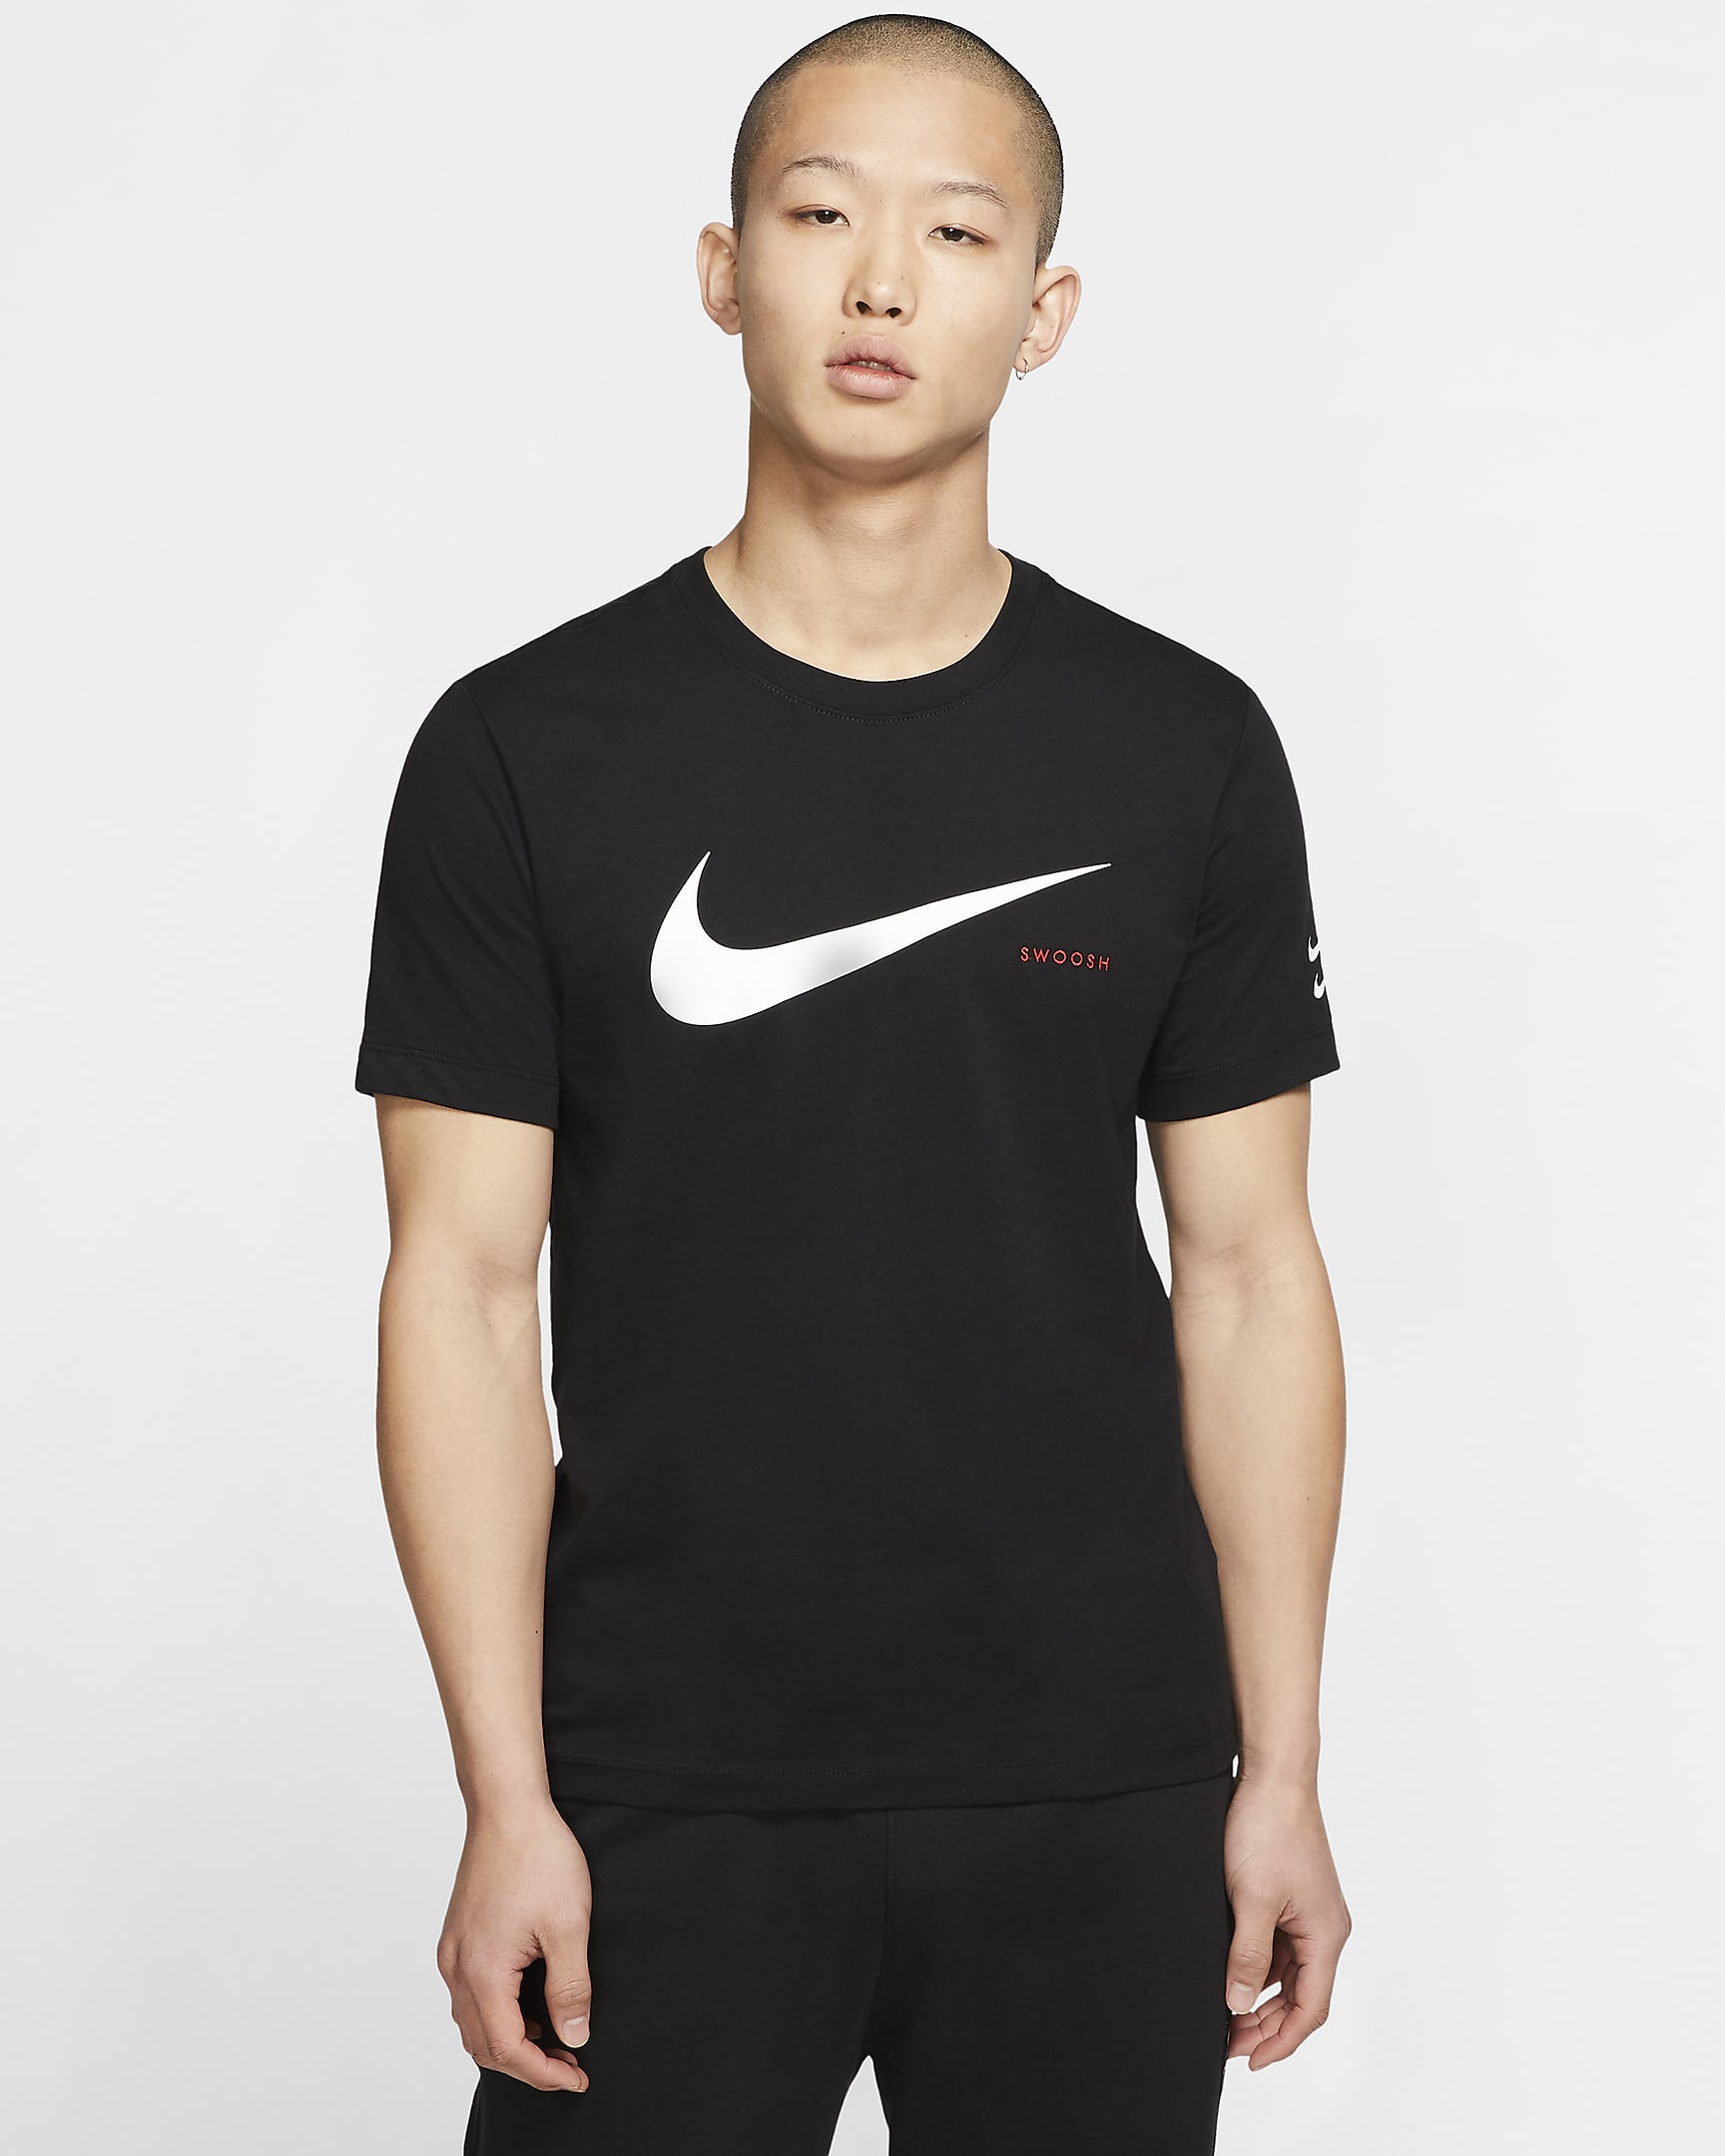 Nike Sportswear Swoosh Men's T-Shirt. Nike SG